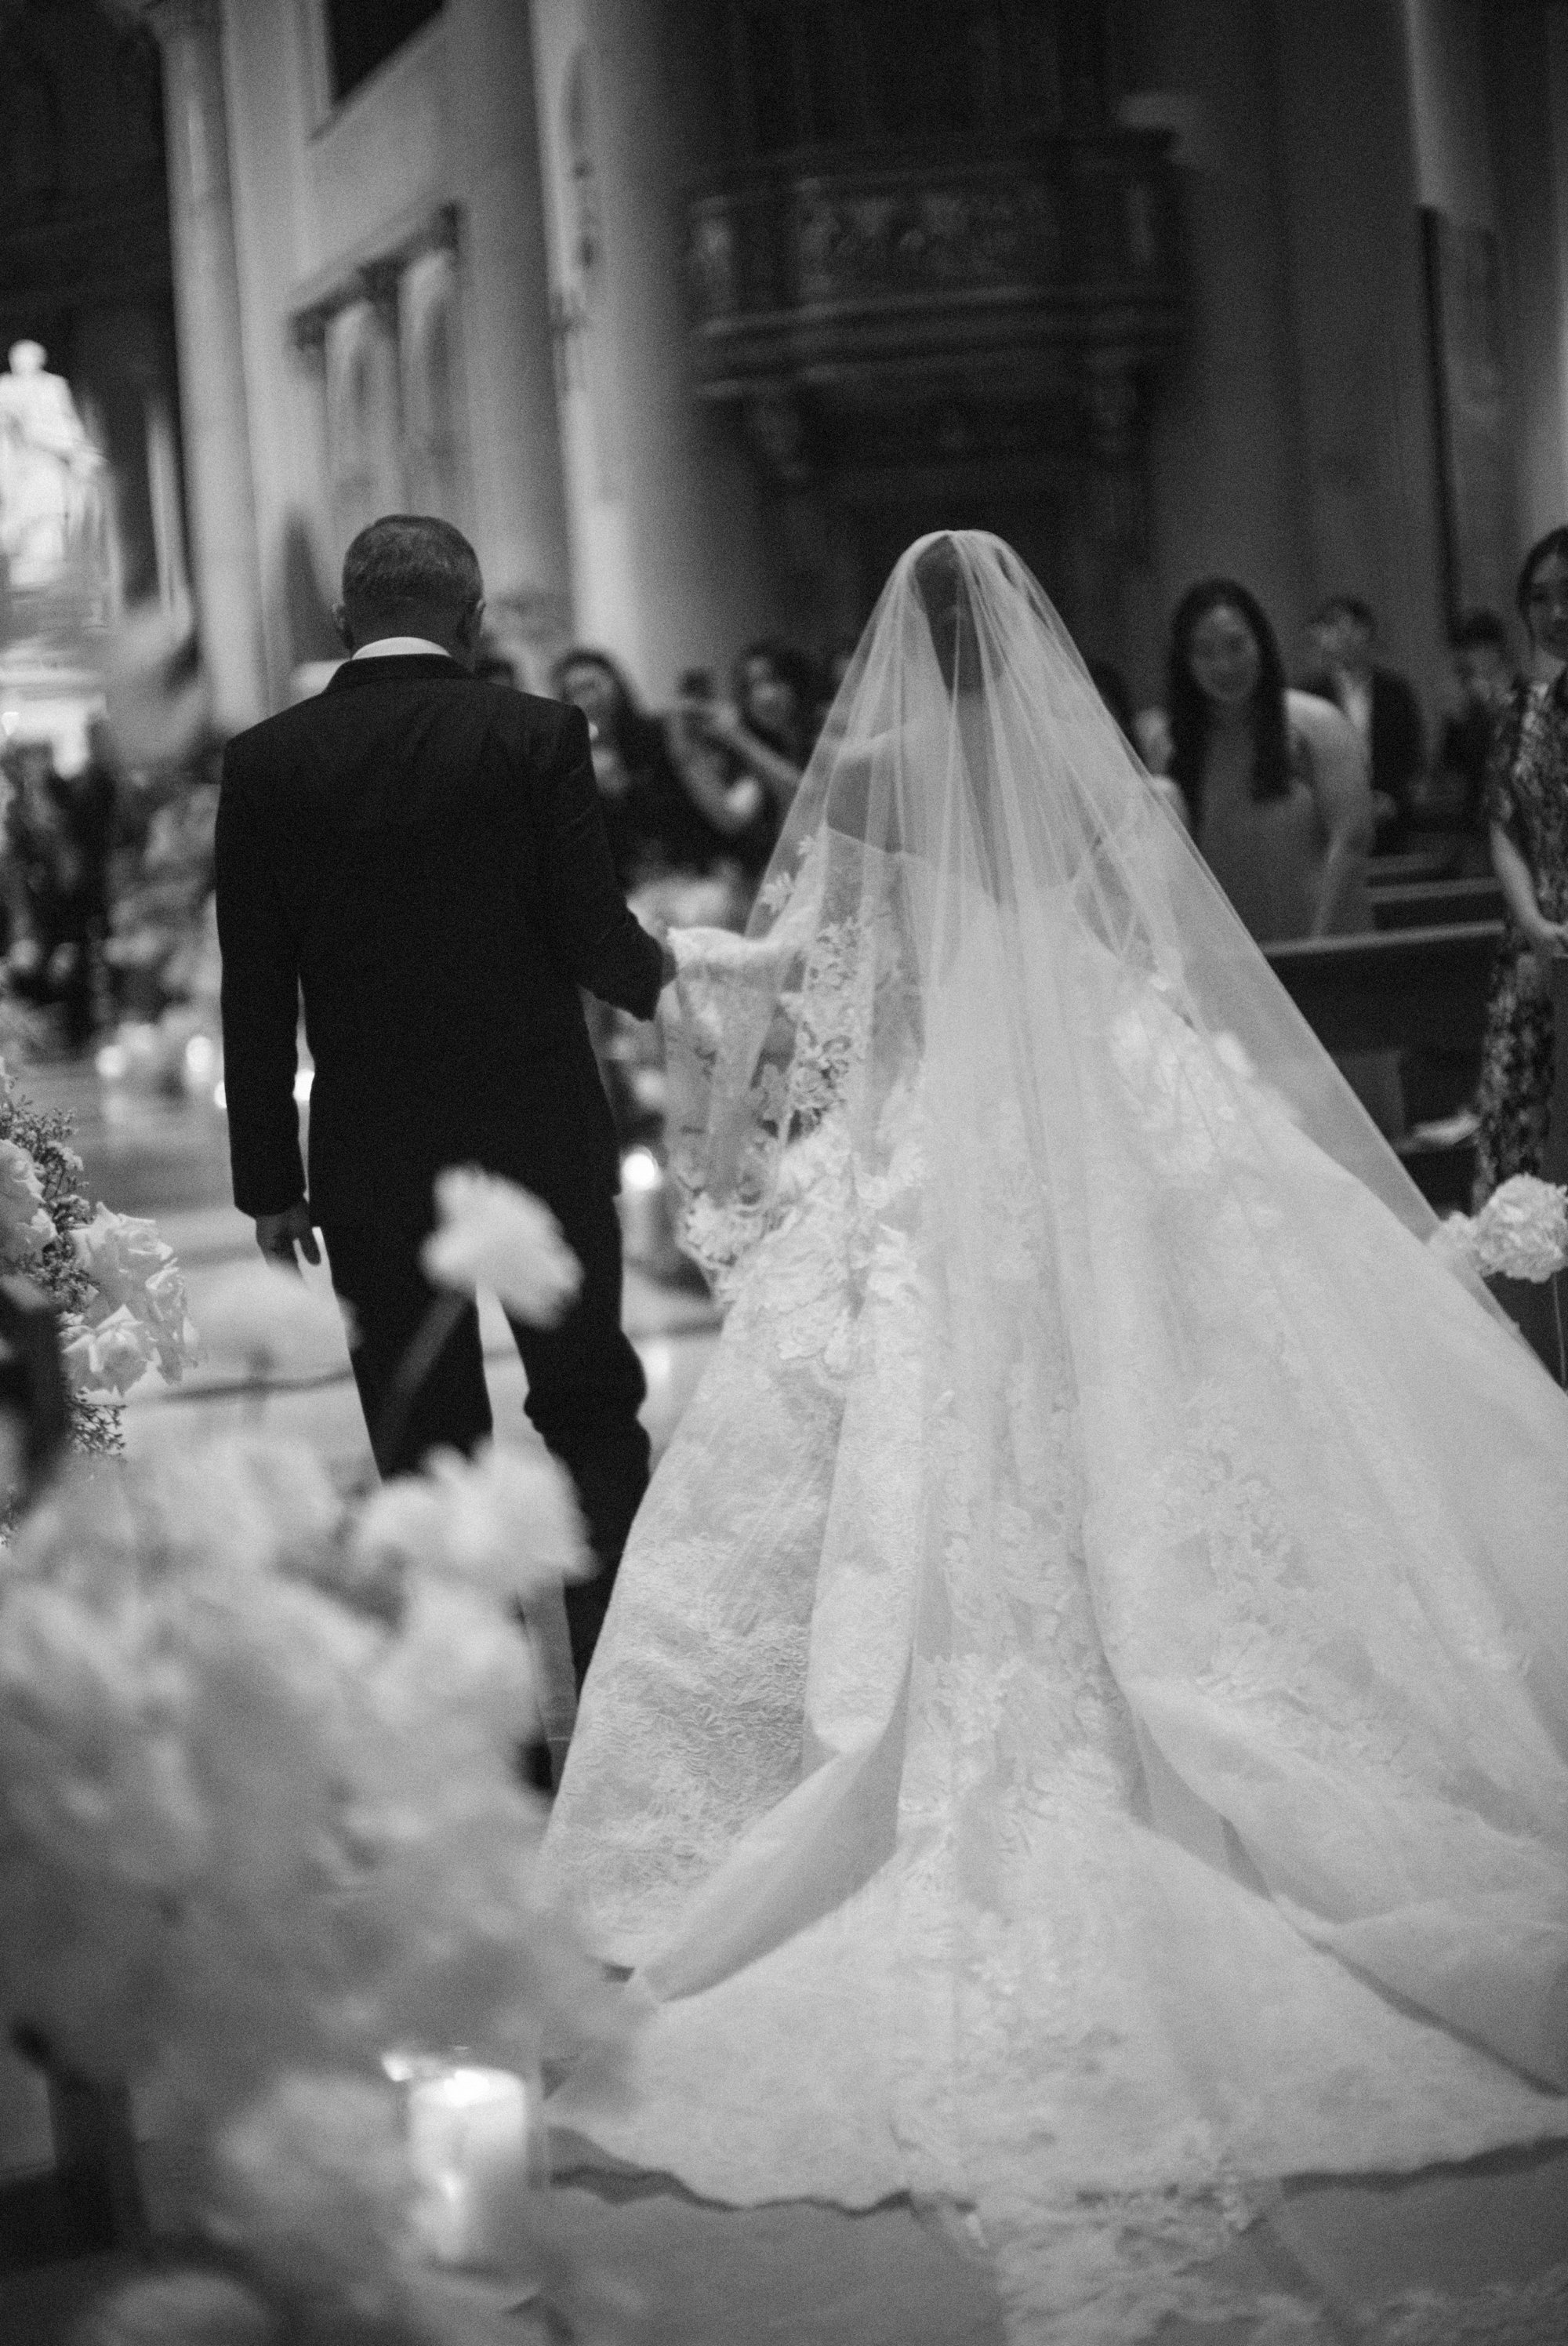 Prawira-Evelyn-Dolomites-Italy-Santre wedding-Yefta Gunawan-Jeriko MUA-Carol Kuntjoro Photography-49.jpg